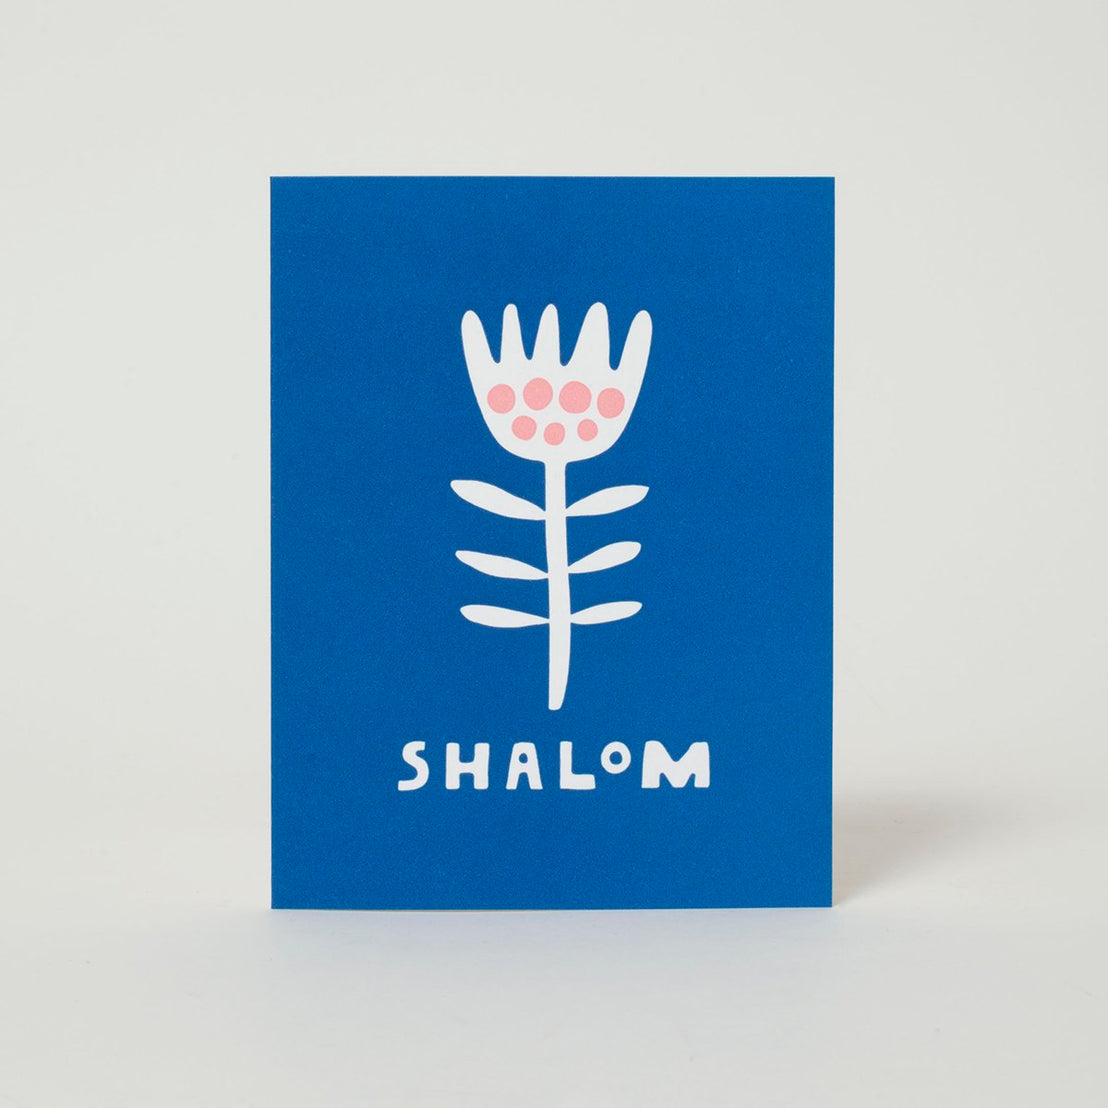 Shalom, Suzy Ultman